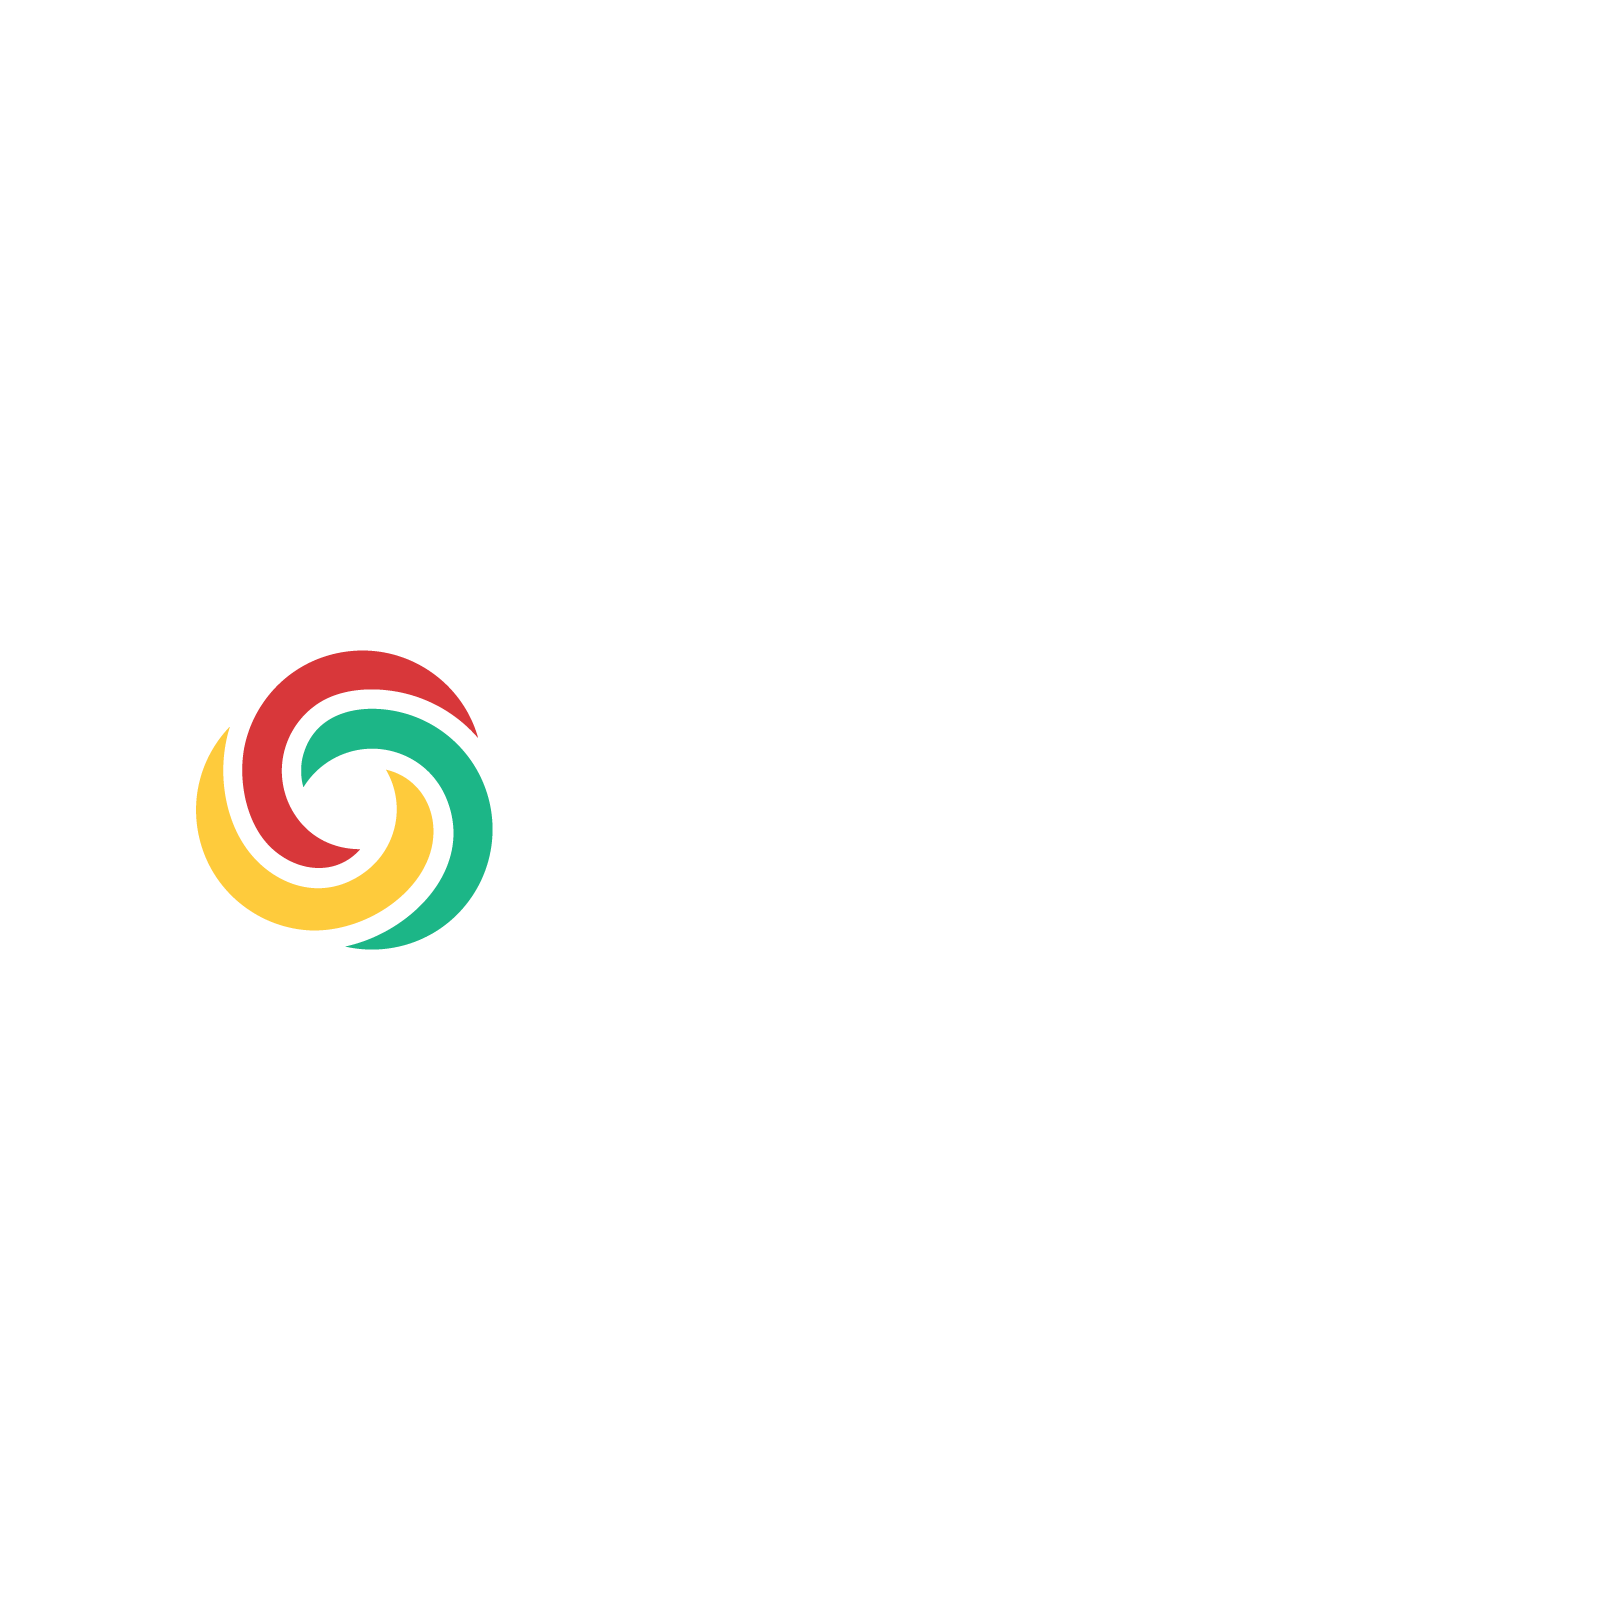 IdFabric